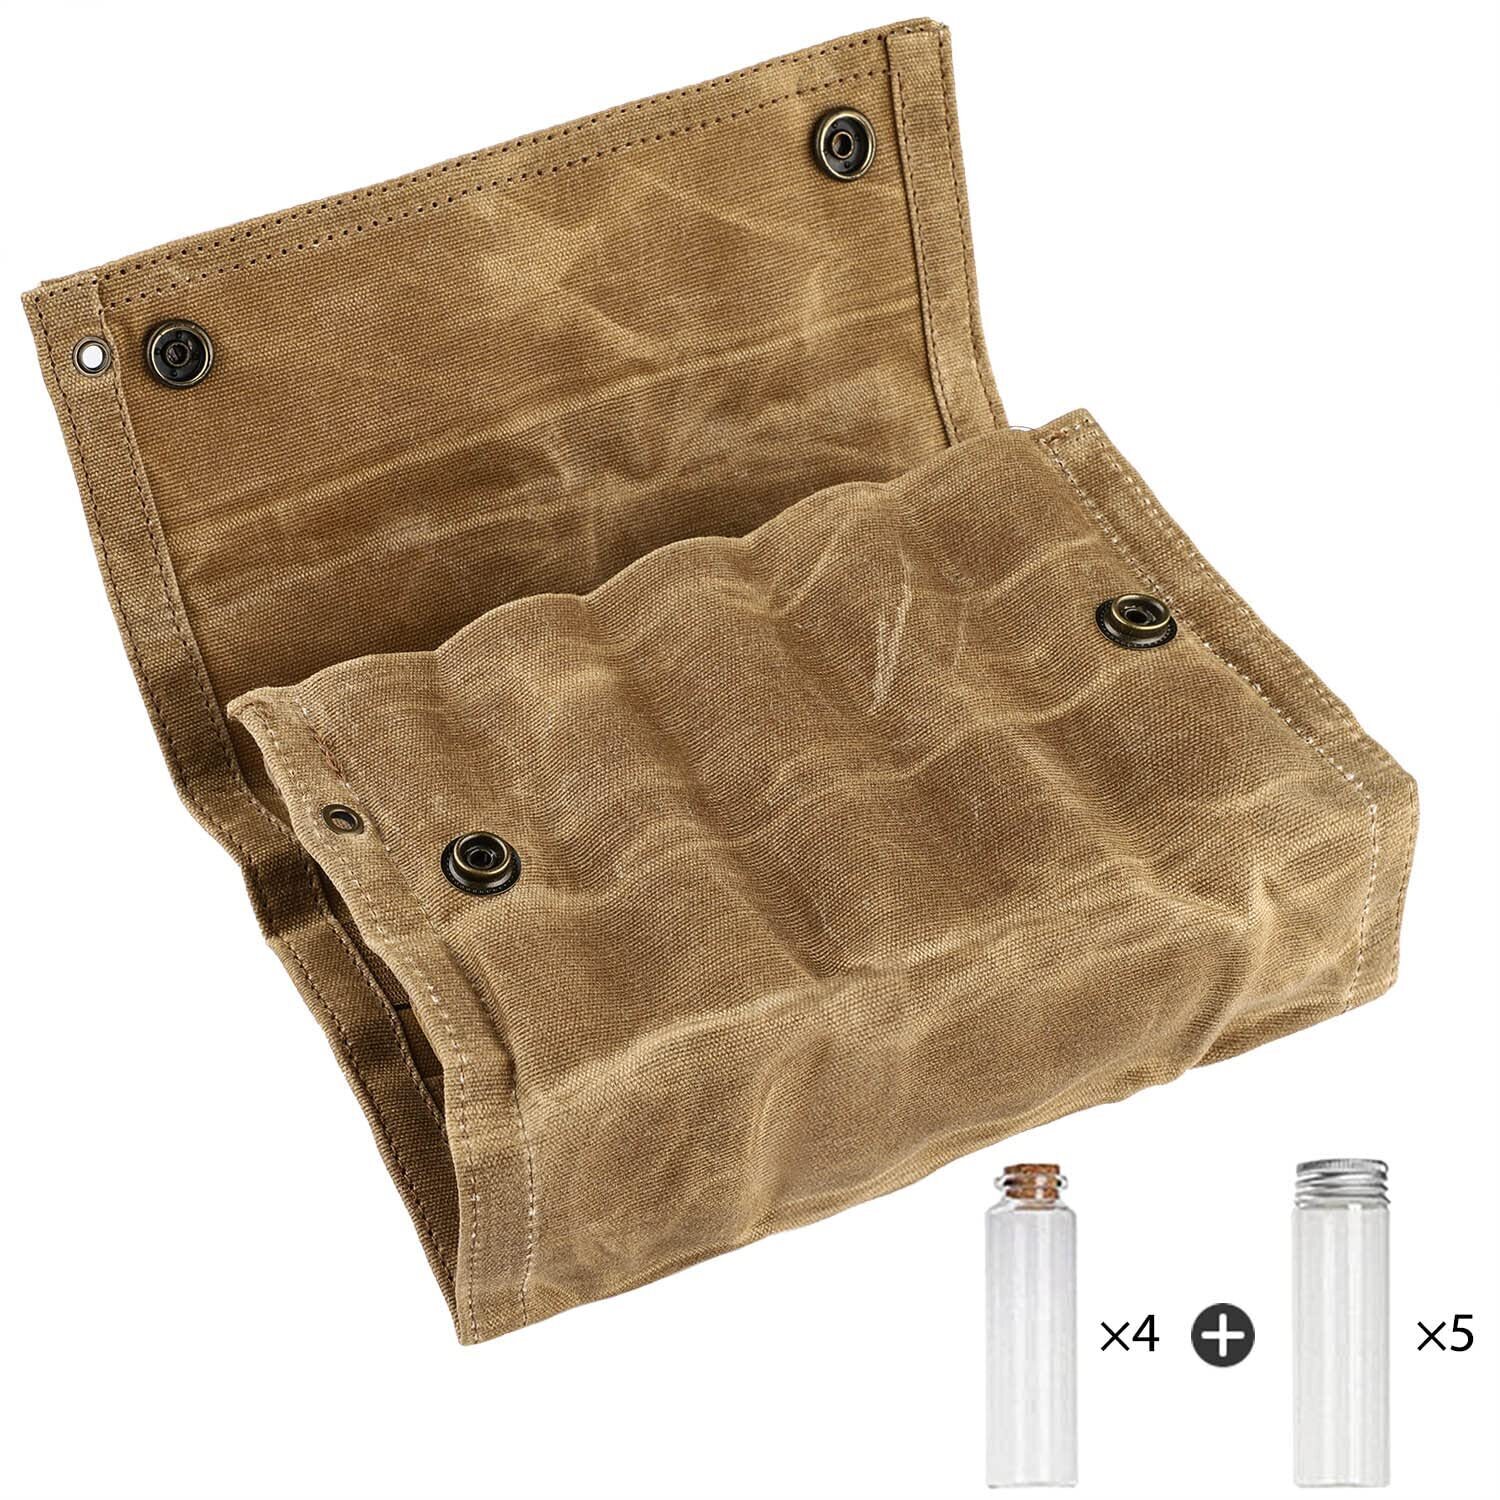 Portable Spice Bag with 9 Spice Jars, Canvas Seasoning Storage Bag Organizer